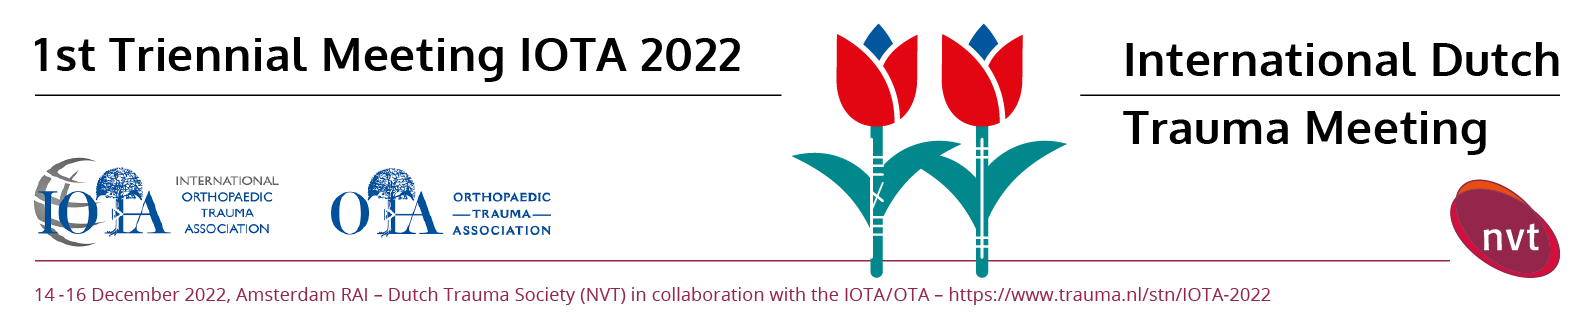 1 st Triennial IOTA meeting 2022 - Dutch Trauma meeting 2022